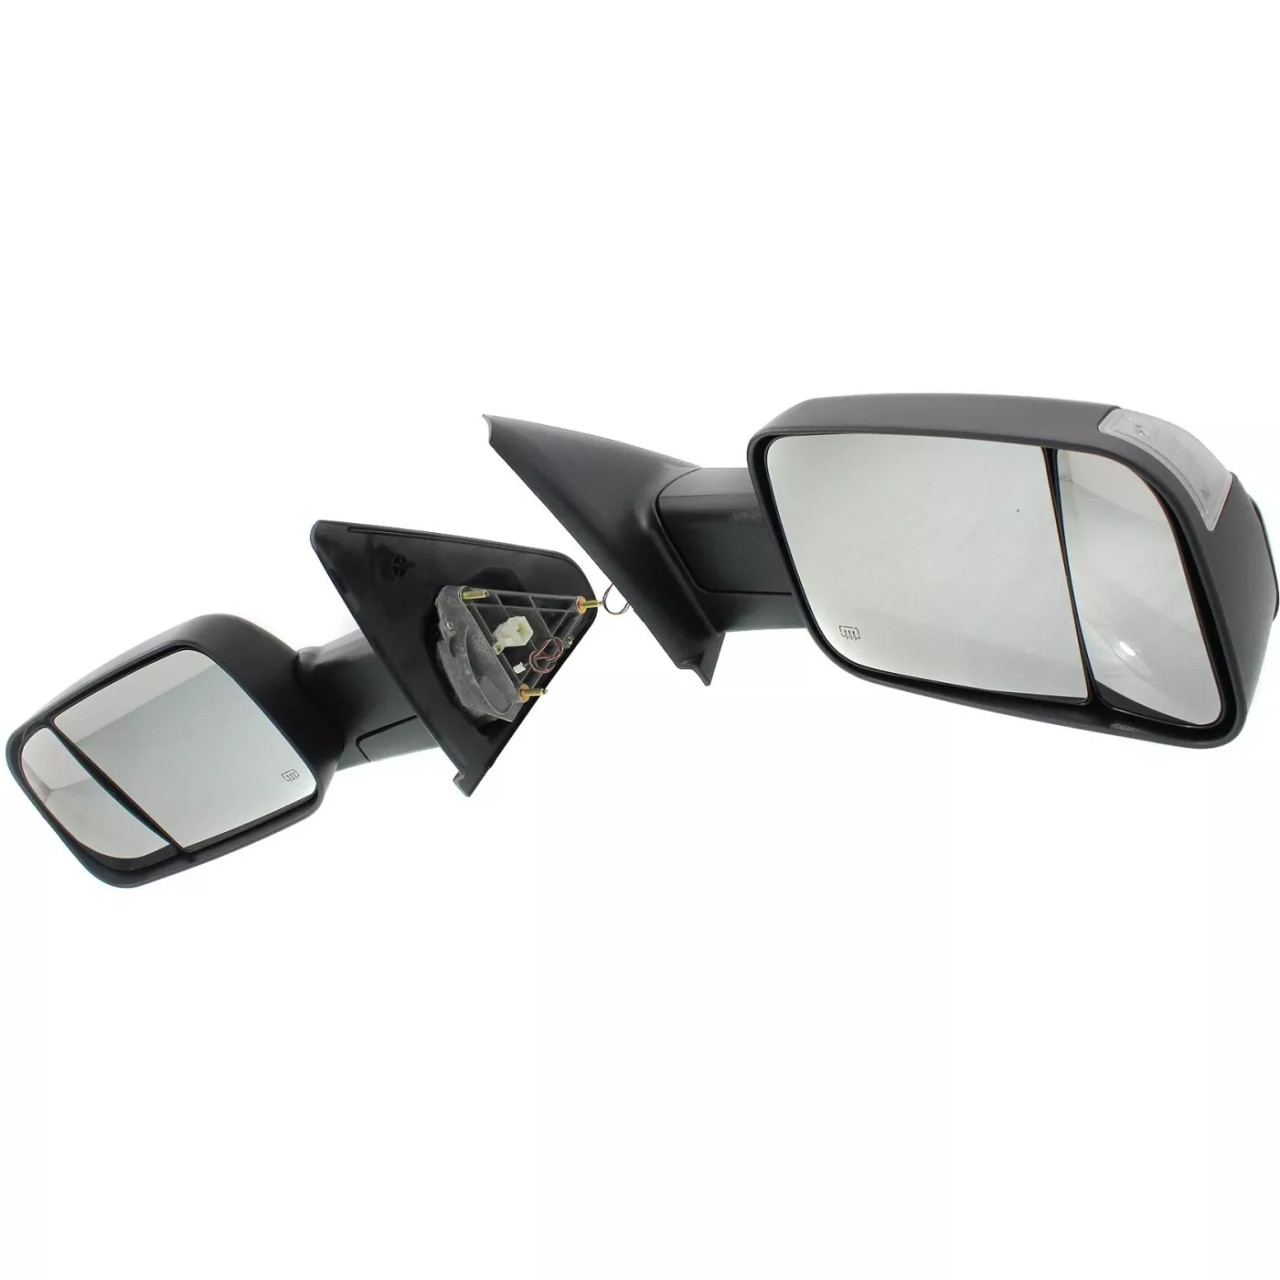 Tow Mirror Set For 2002 2009 Dodge Ram 1500 Left & Right Power Heat Blind Spot